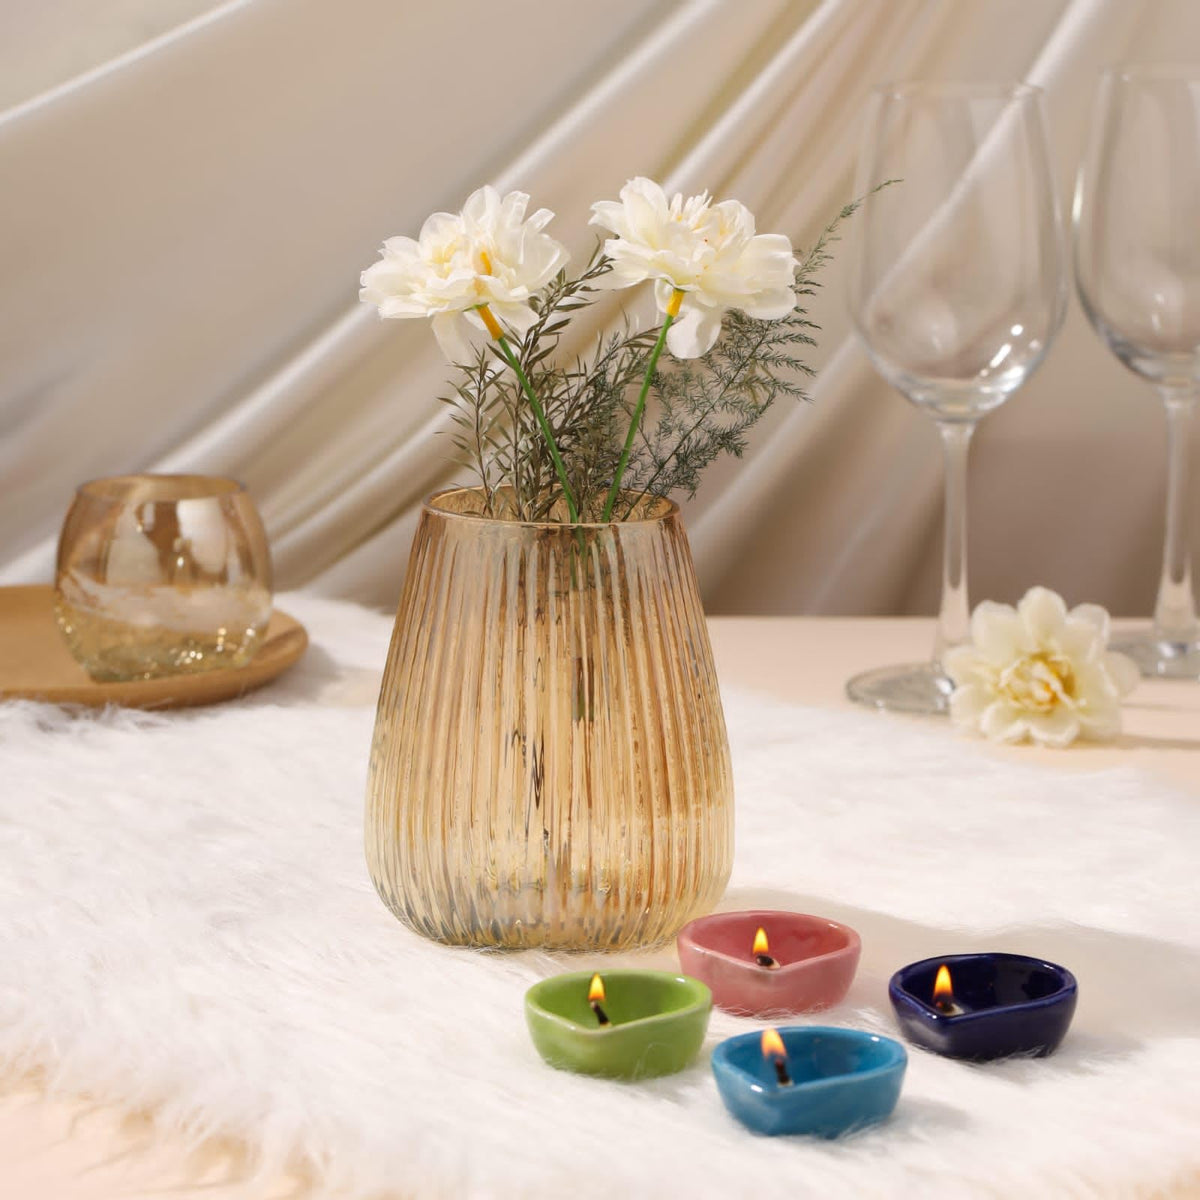 Gleevers Diwali Gift Pack |Diwali Gift Pack of 5 with Glass Vase (Golden) & 4 Diya for Diwali (Assorted) | Diwali Gift Items, Home Décor Items (Glass Vase (Golden) + 4 Ceramic Diya)